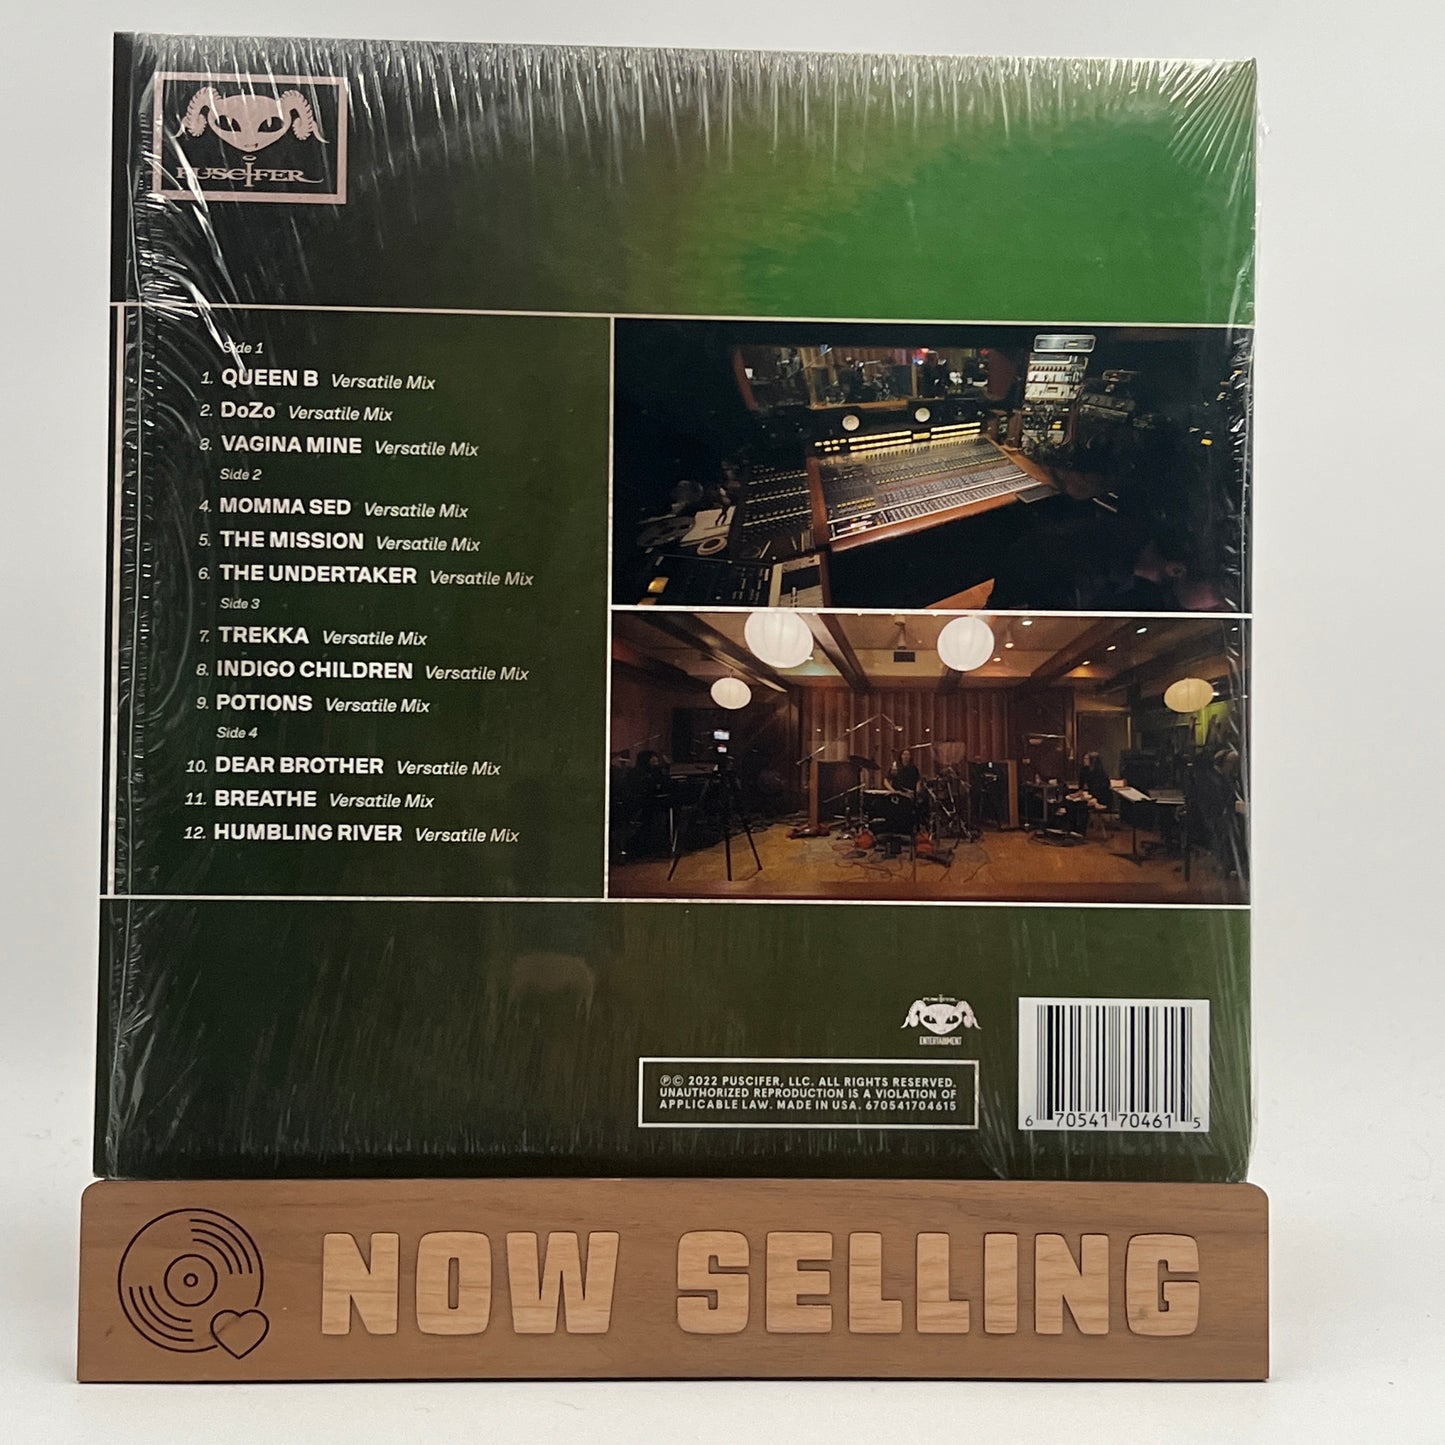 Puscifer - V is for Versatile Vinyl LP Green Translucent Signed by Carina